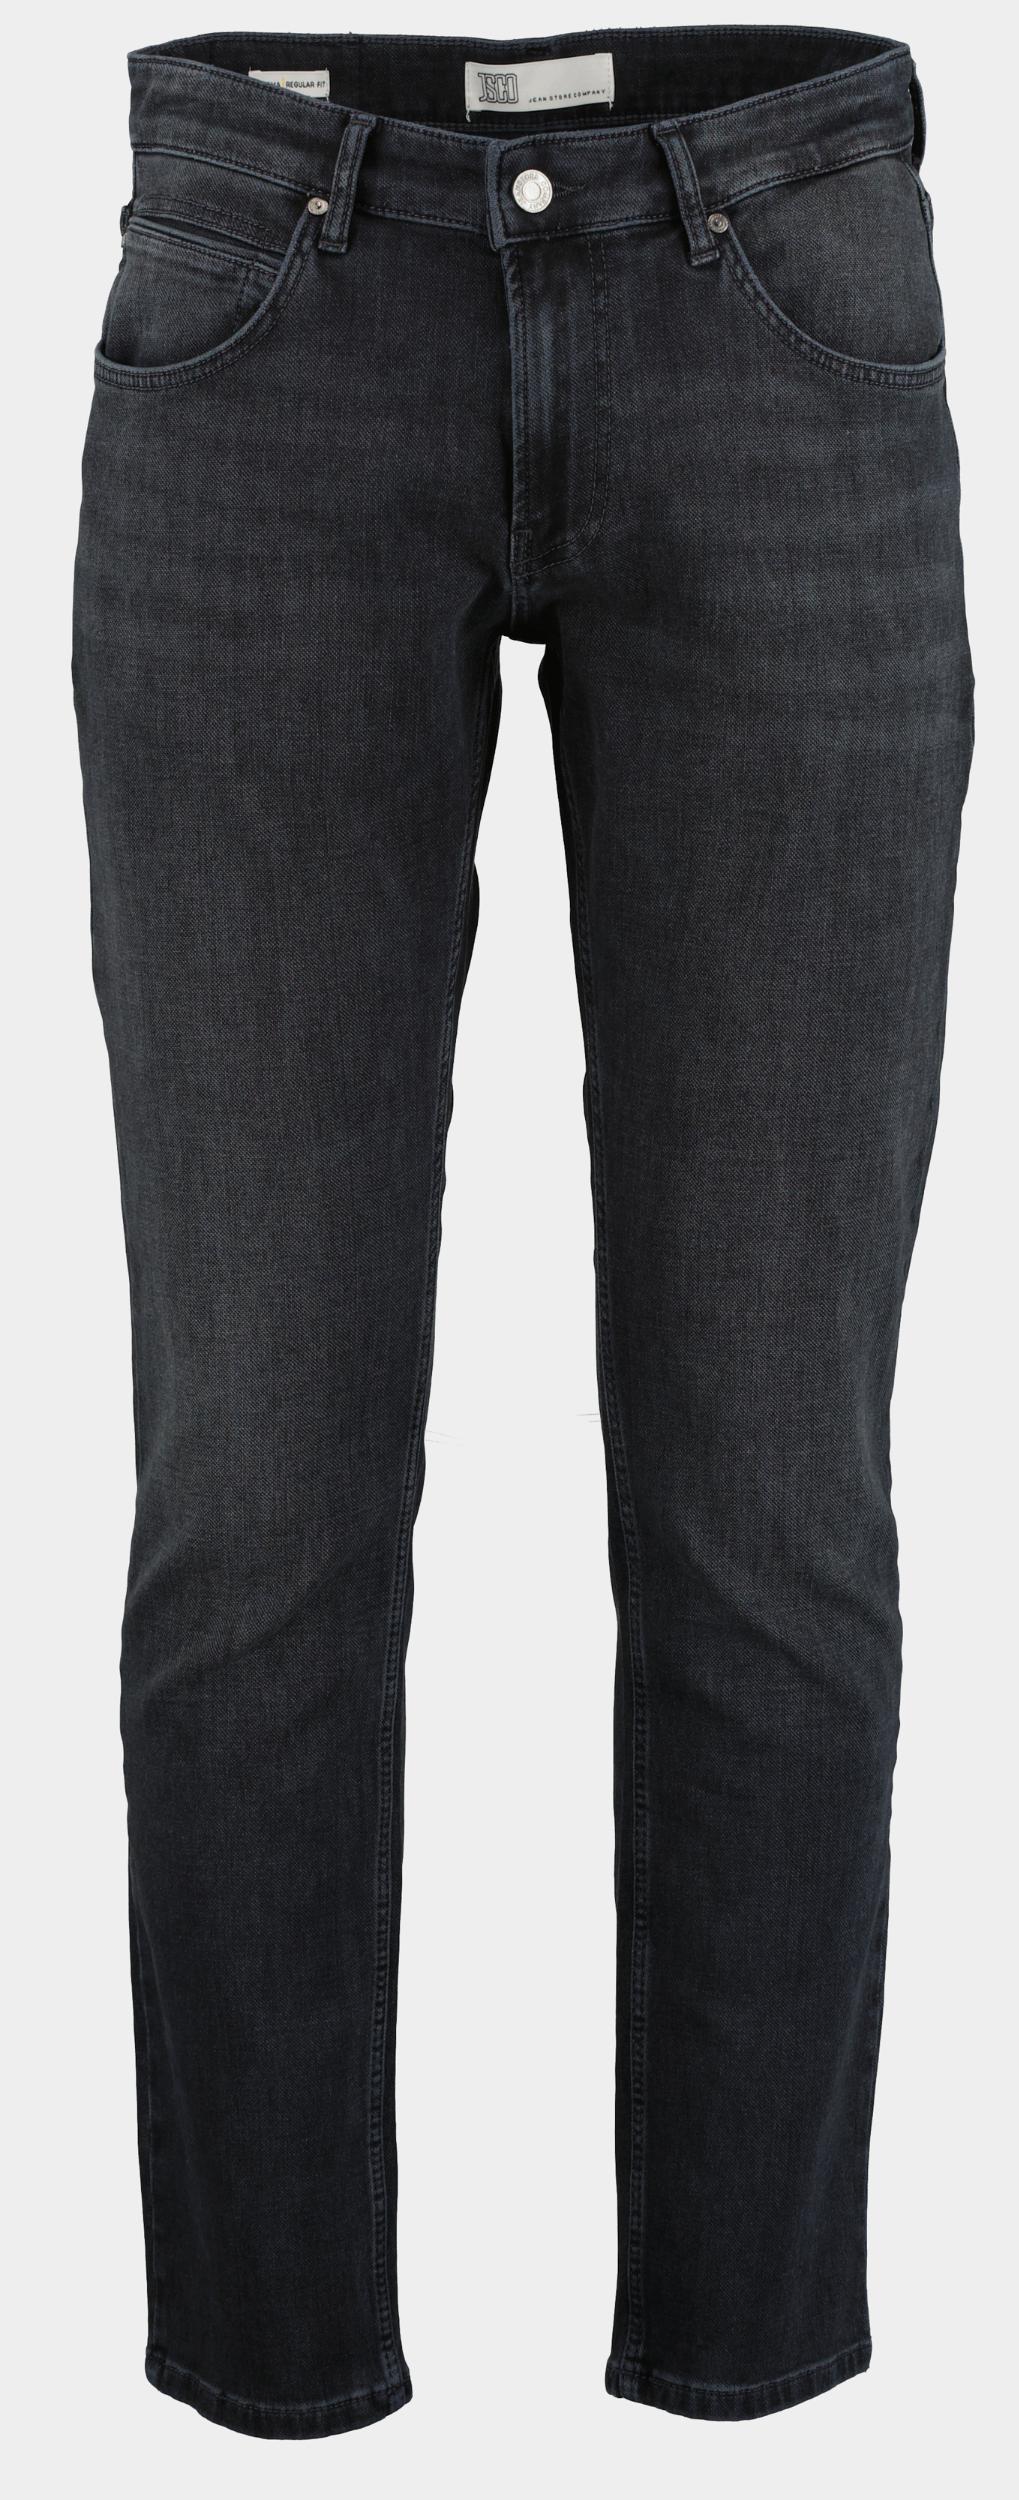 Jean Store Company 5-Pocket Jeans Zwart  2210-JR73-Parma/Black Sax